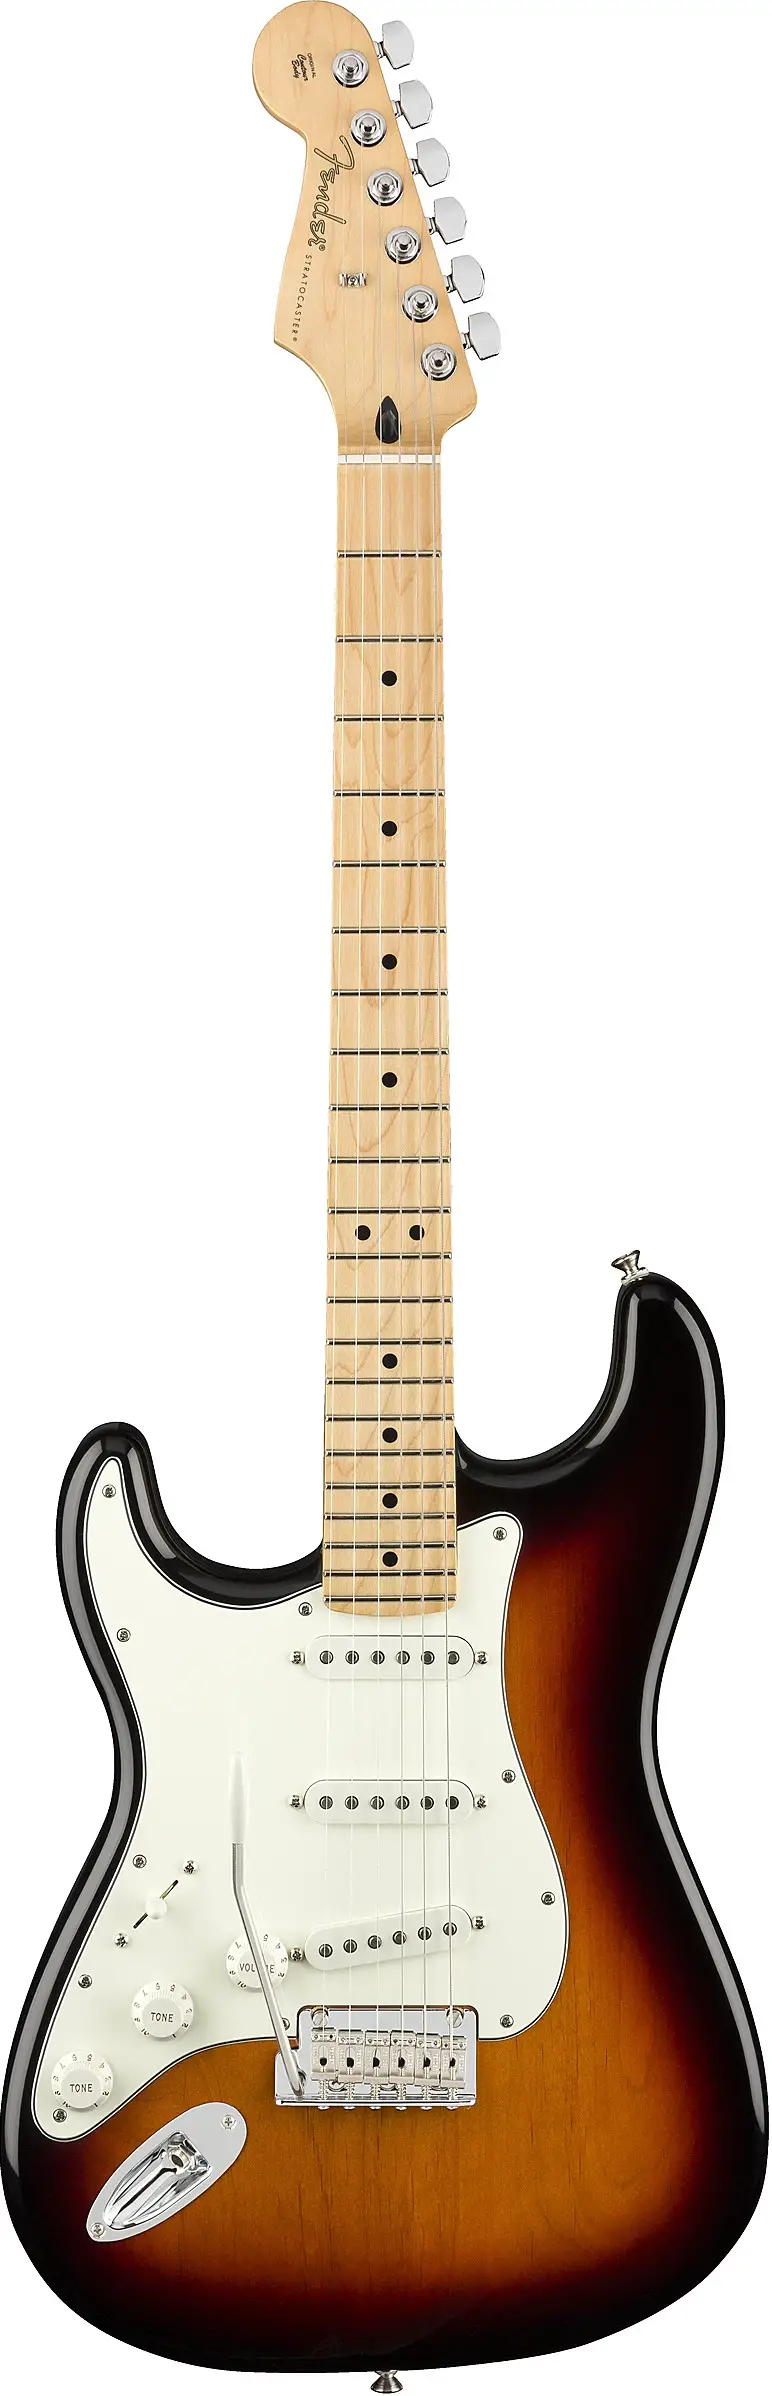 Player Stratocaster� Left-Handed by Fender